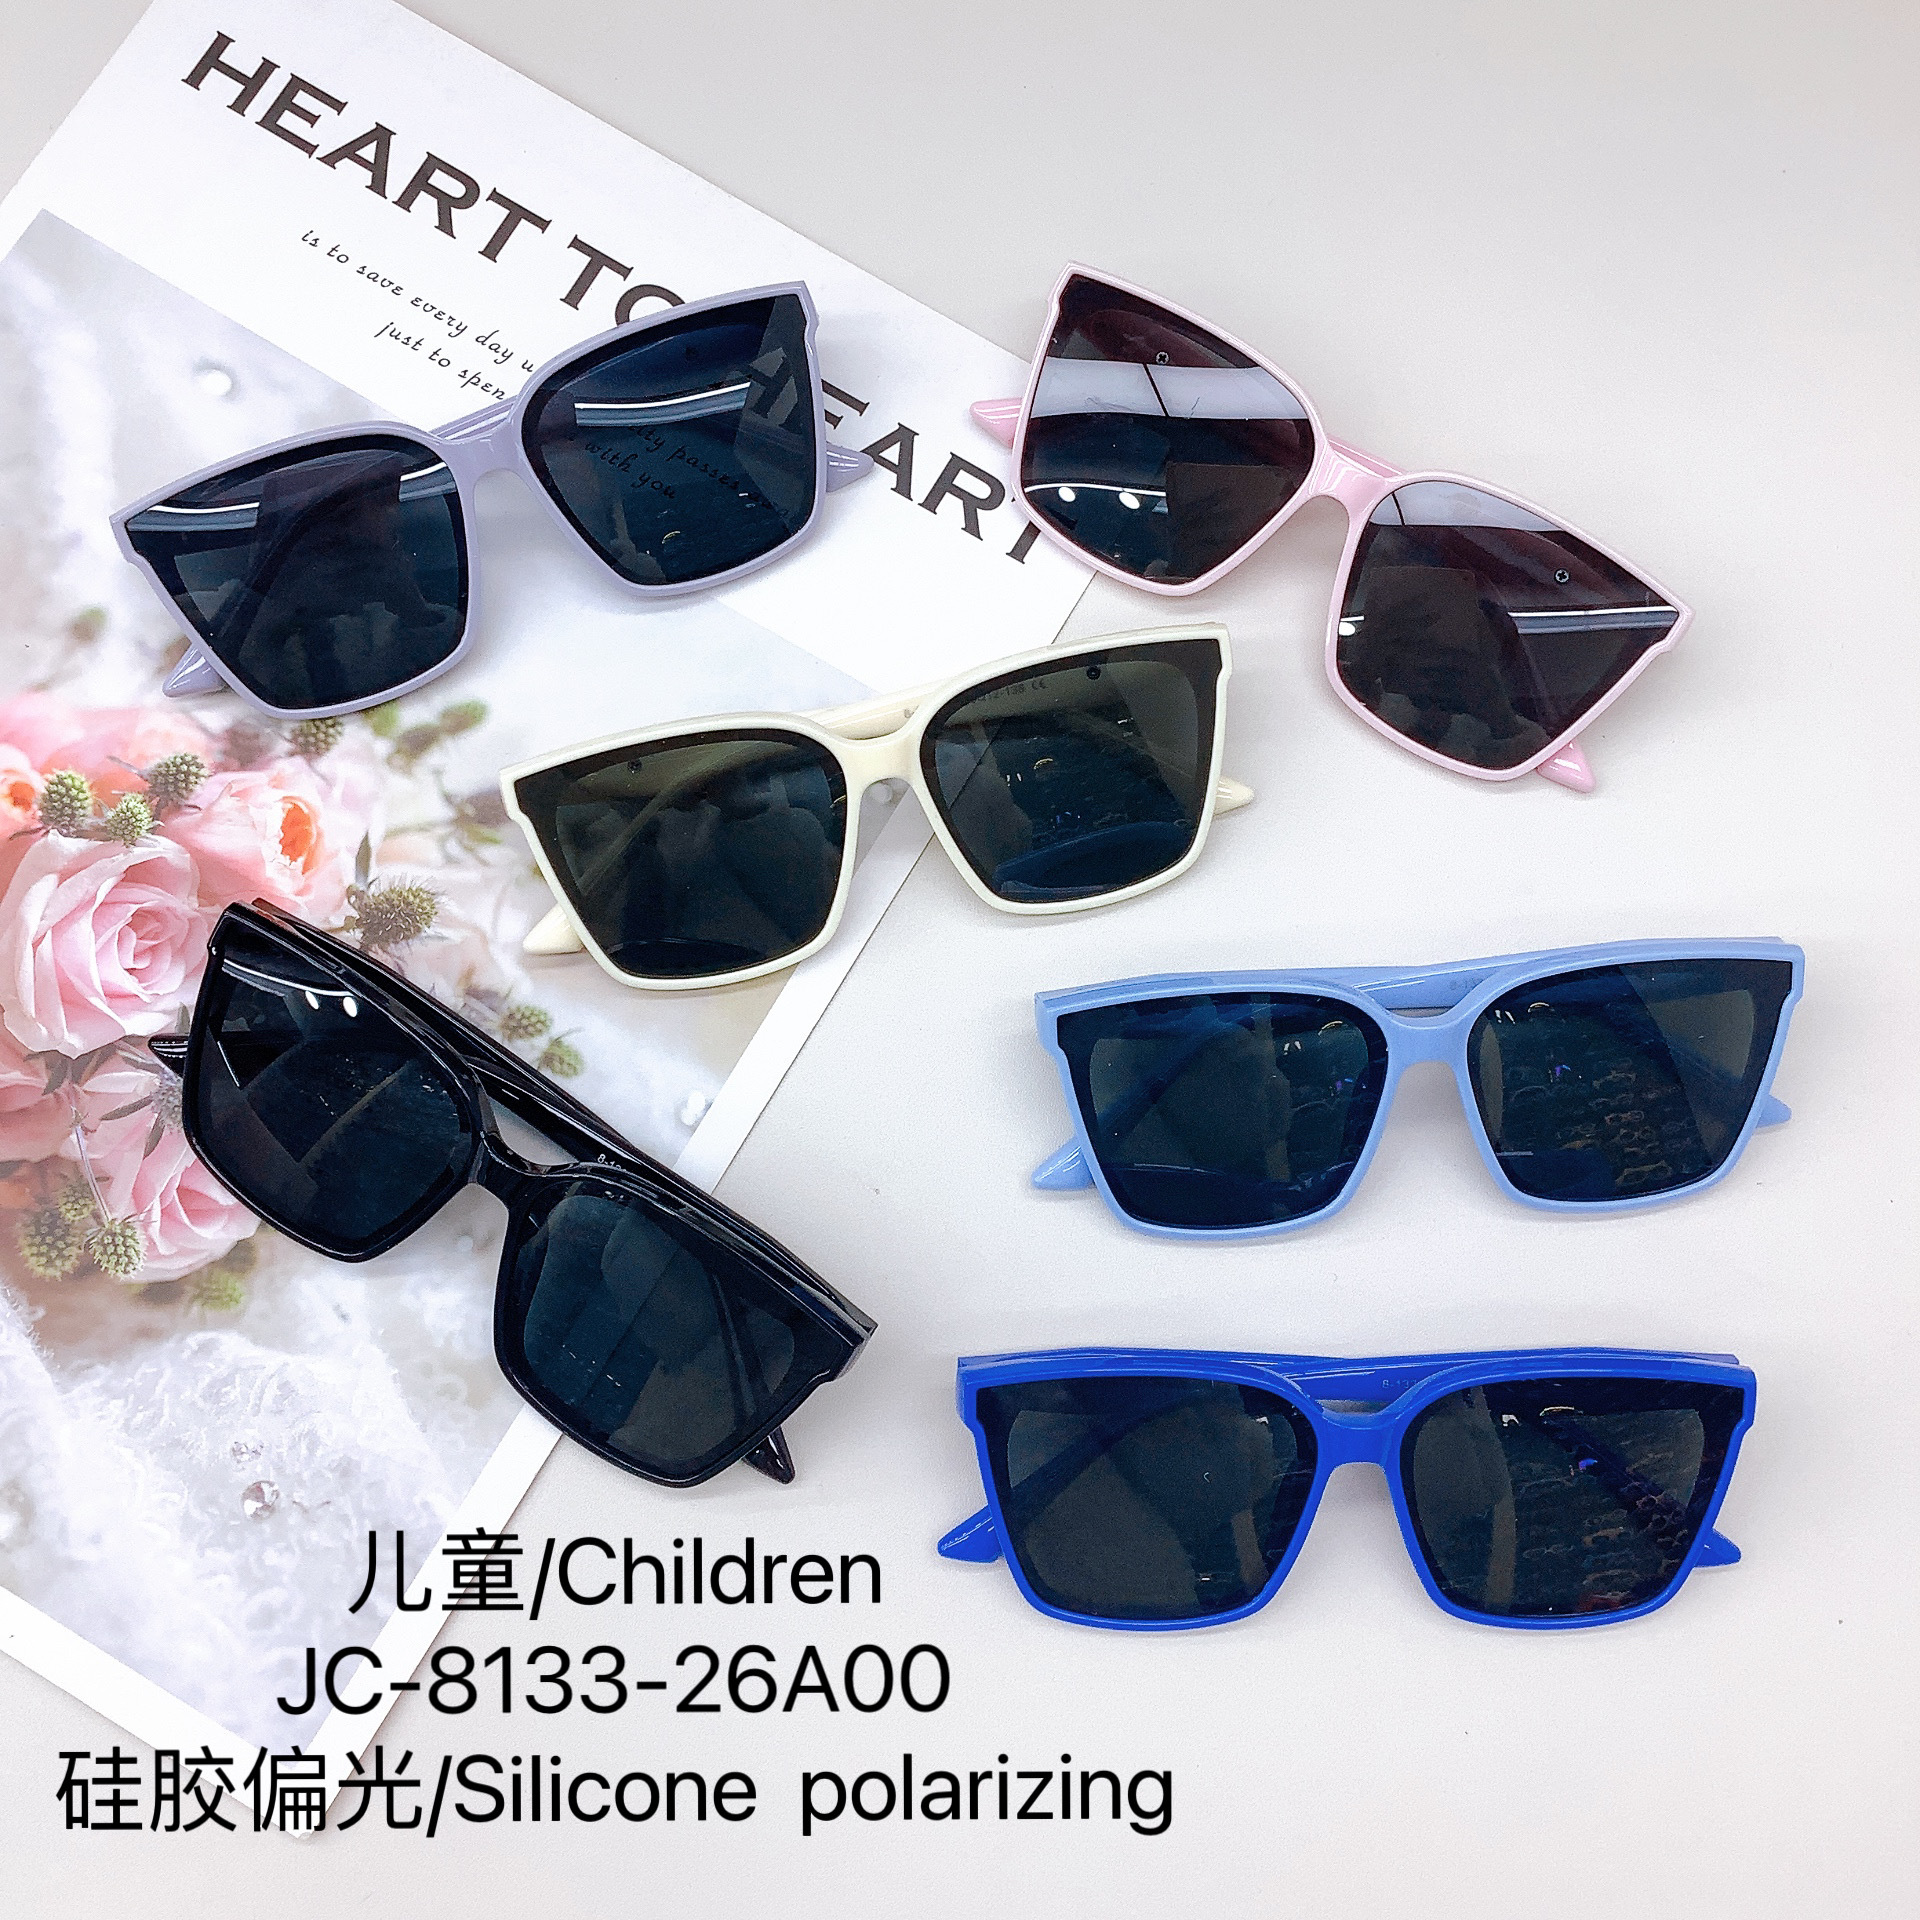 Fashion New Silicone Polarized Kids Sunglasses Sun Protection for Girls Cute Sunglasses Sun Protection for Boys Glasses